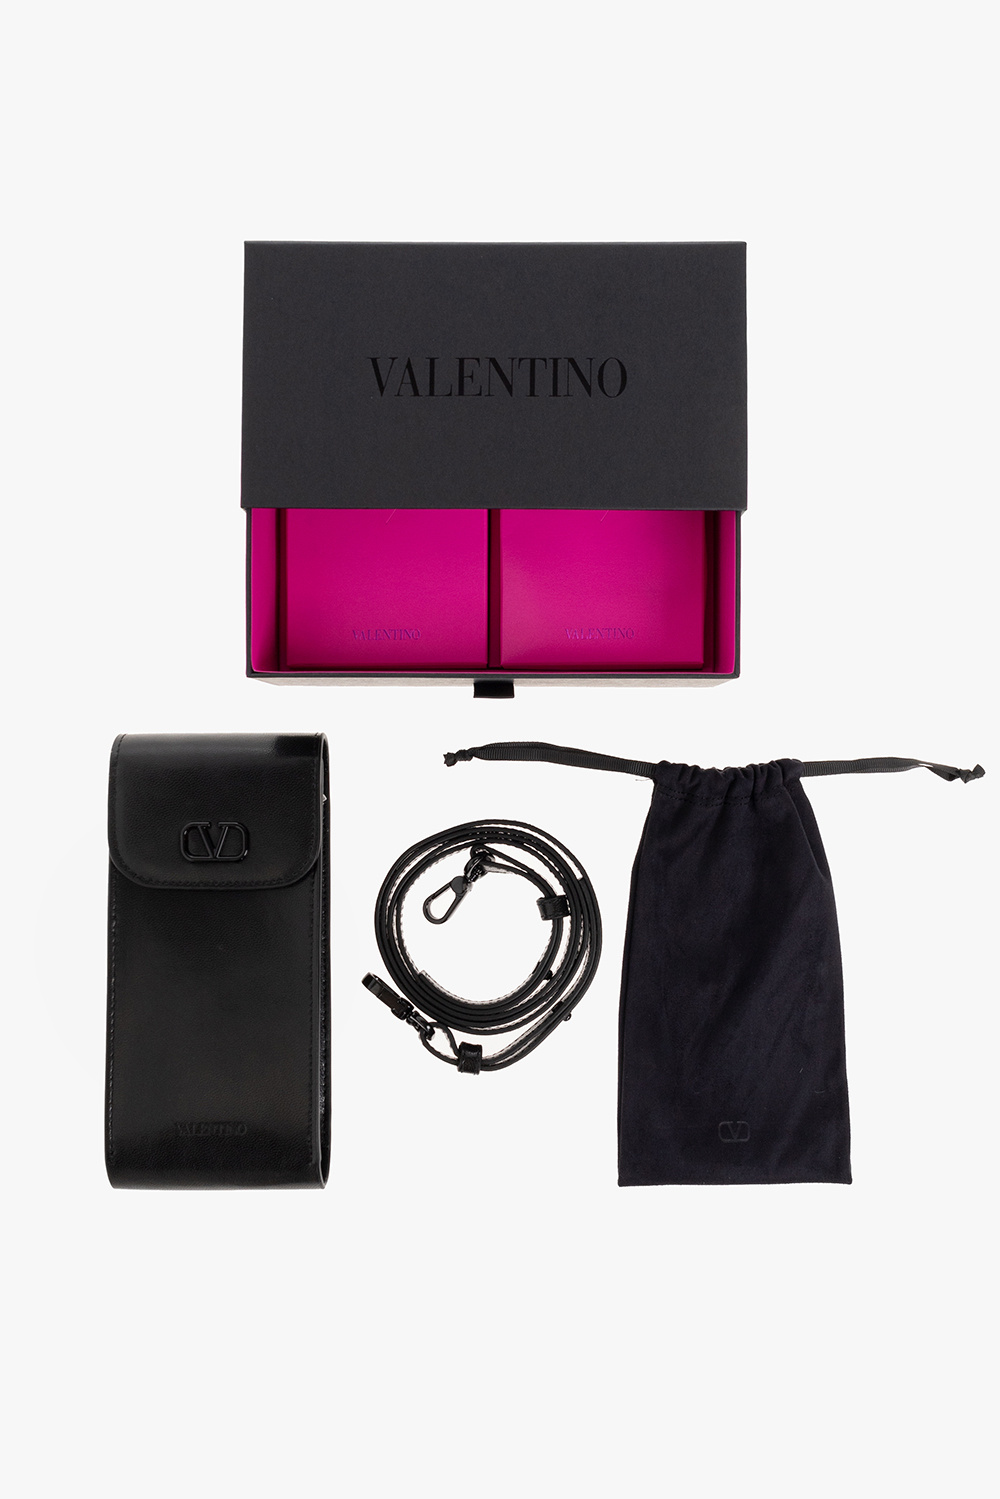 Valentino Eyewear tol eyewear trapezium cat eye sunglasses item